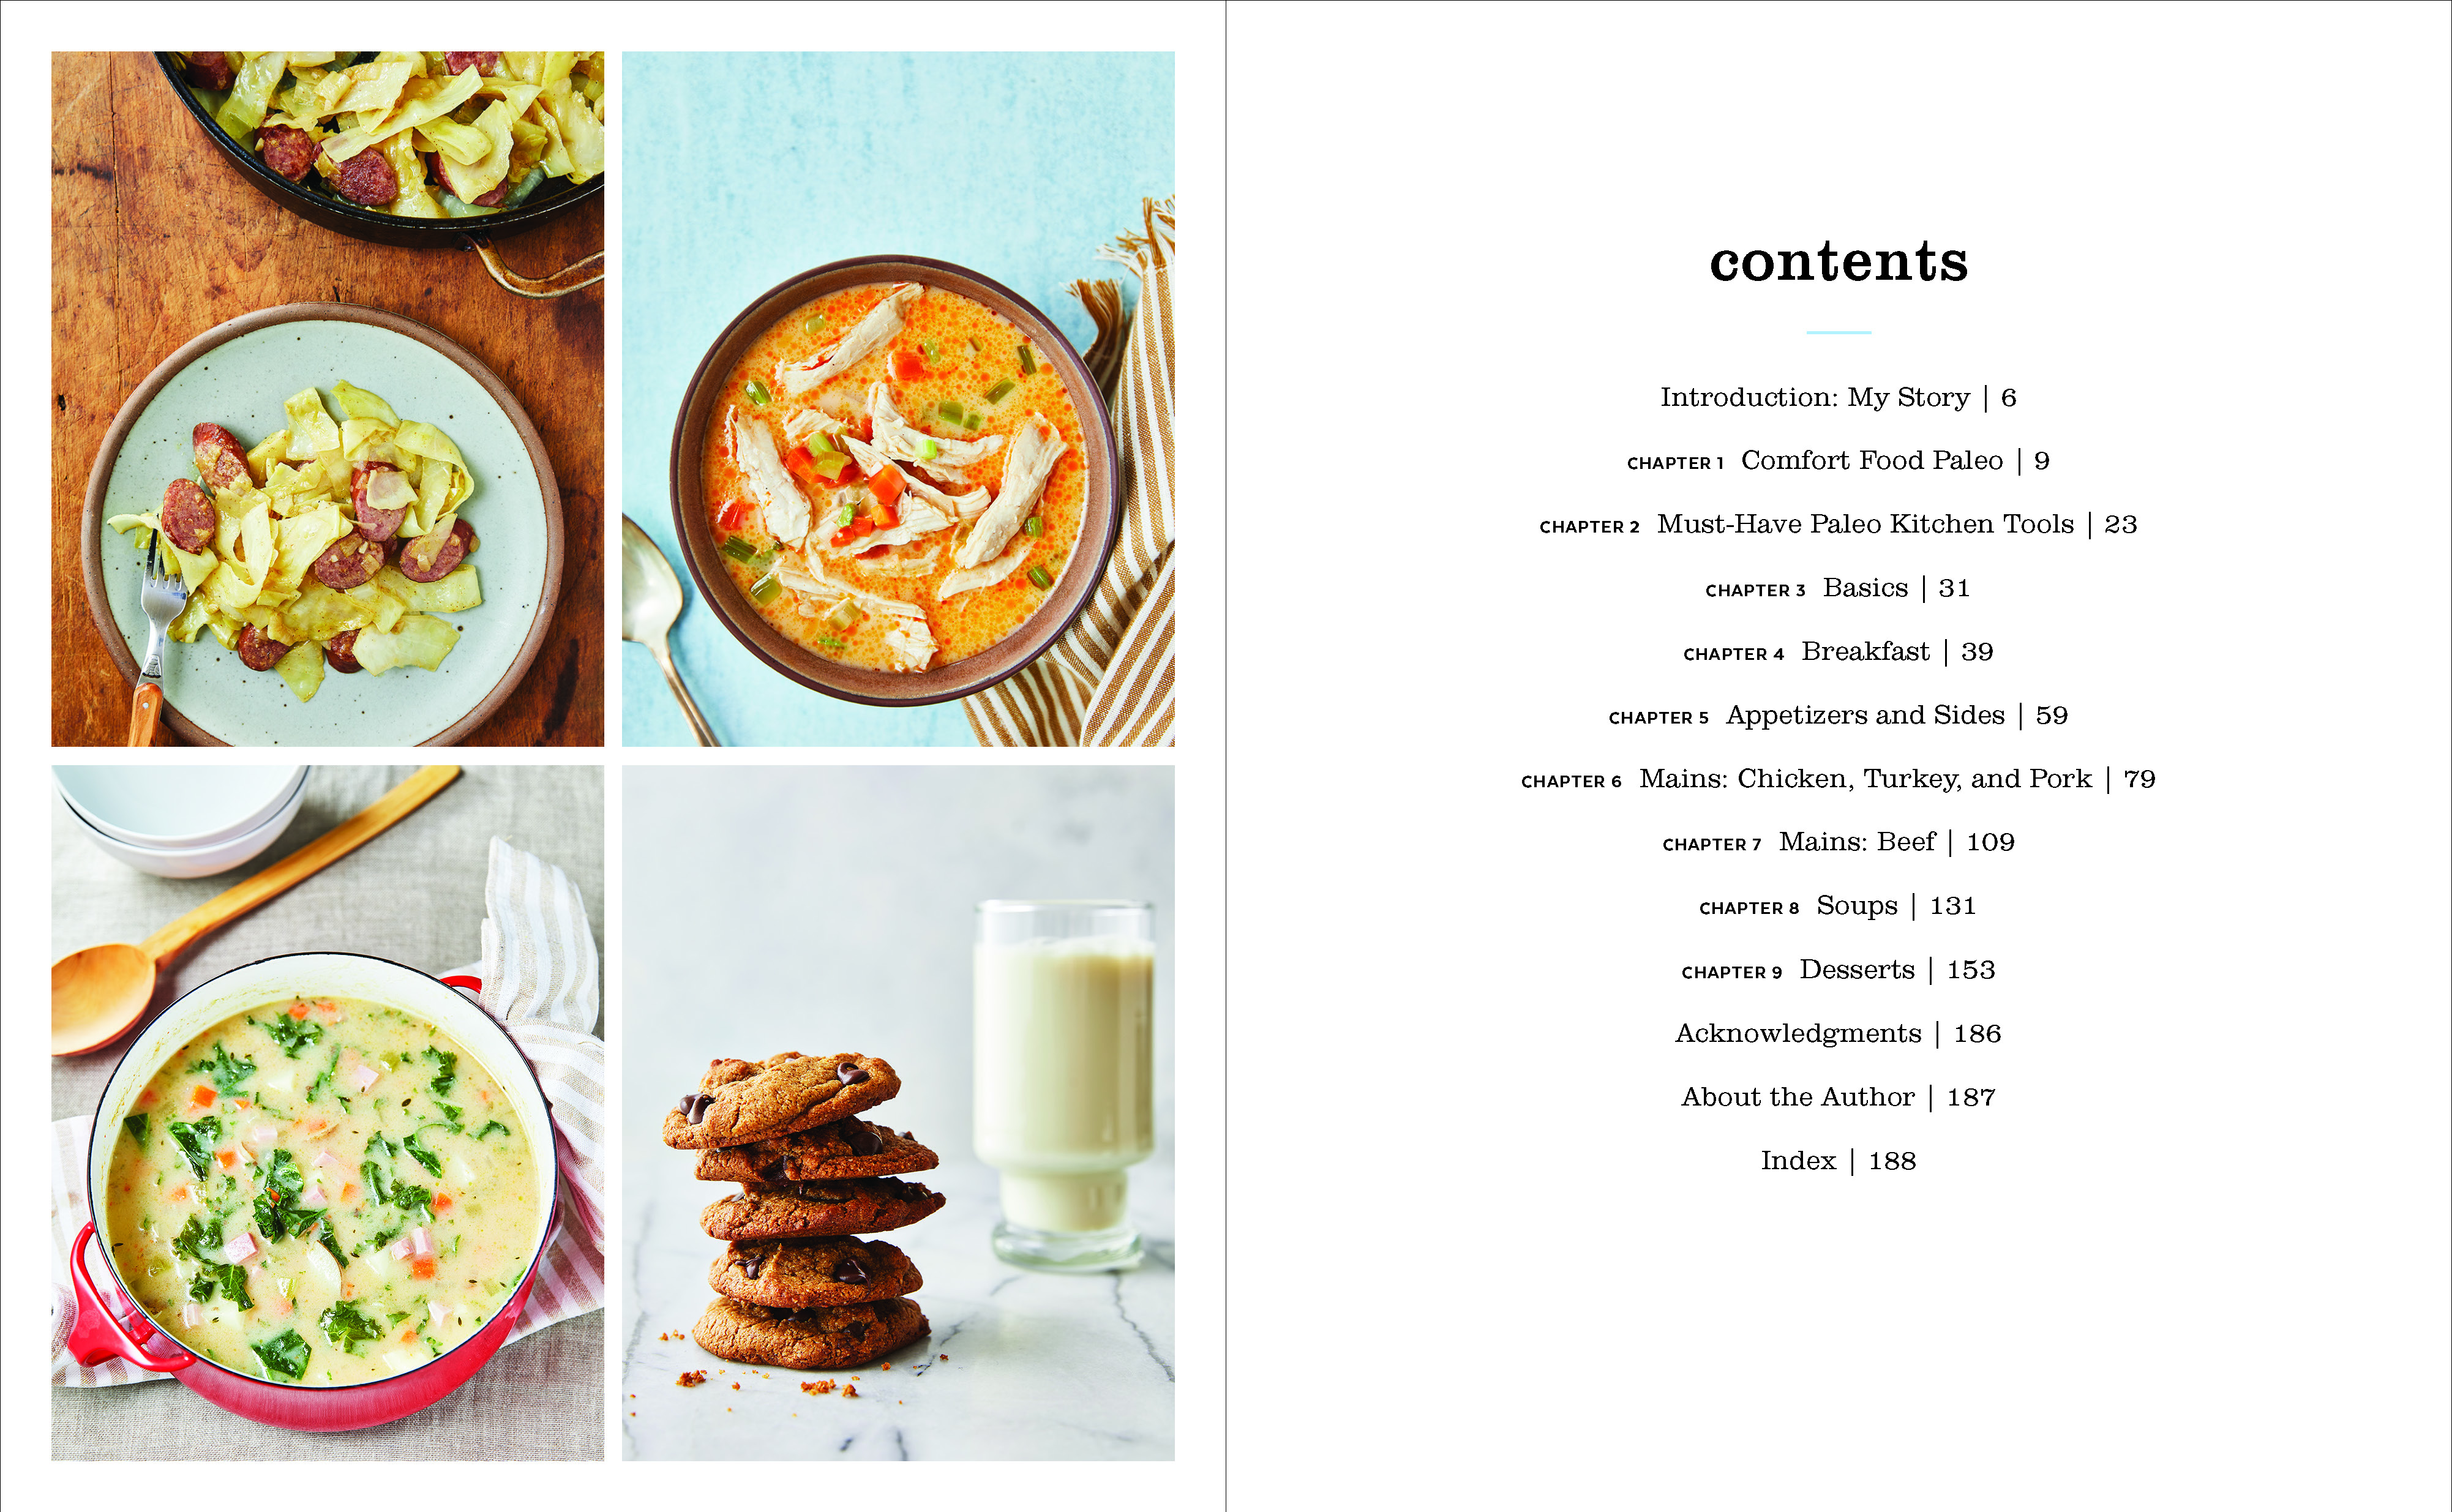 Clean Paleo Comfort Food Cookbook